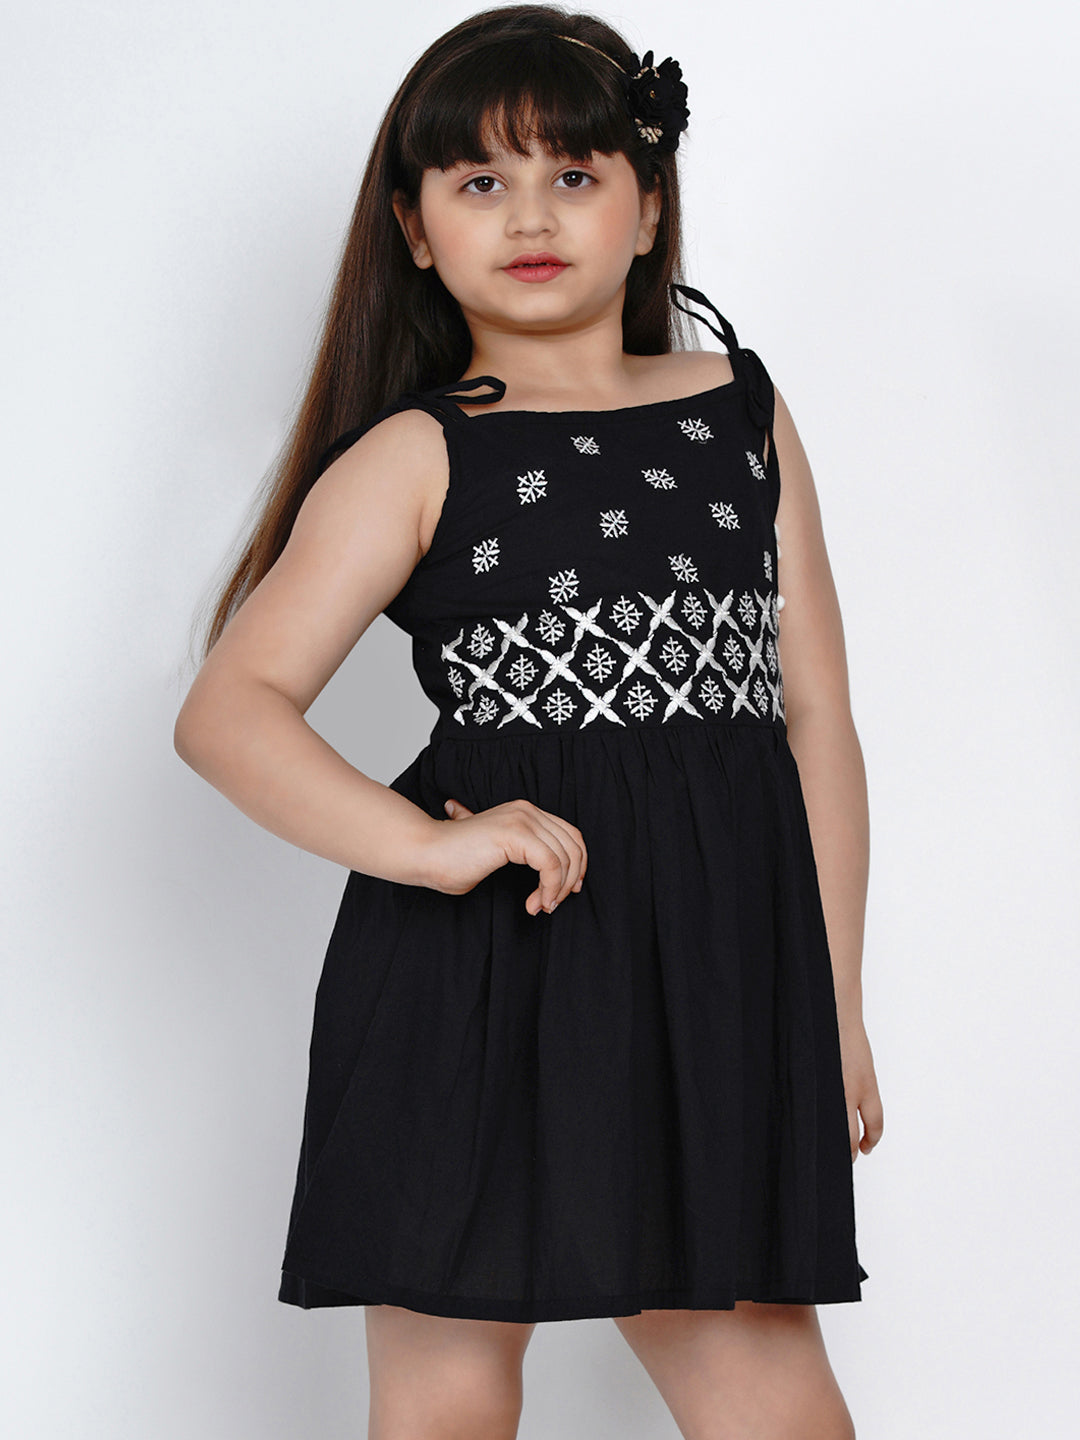 Stylish New Fashion Black Round Off_White Frock & Dress for Baby Girls –  The Venutaloza Store